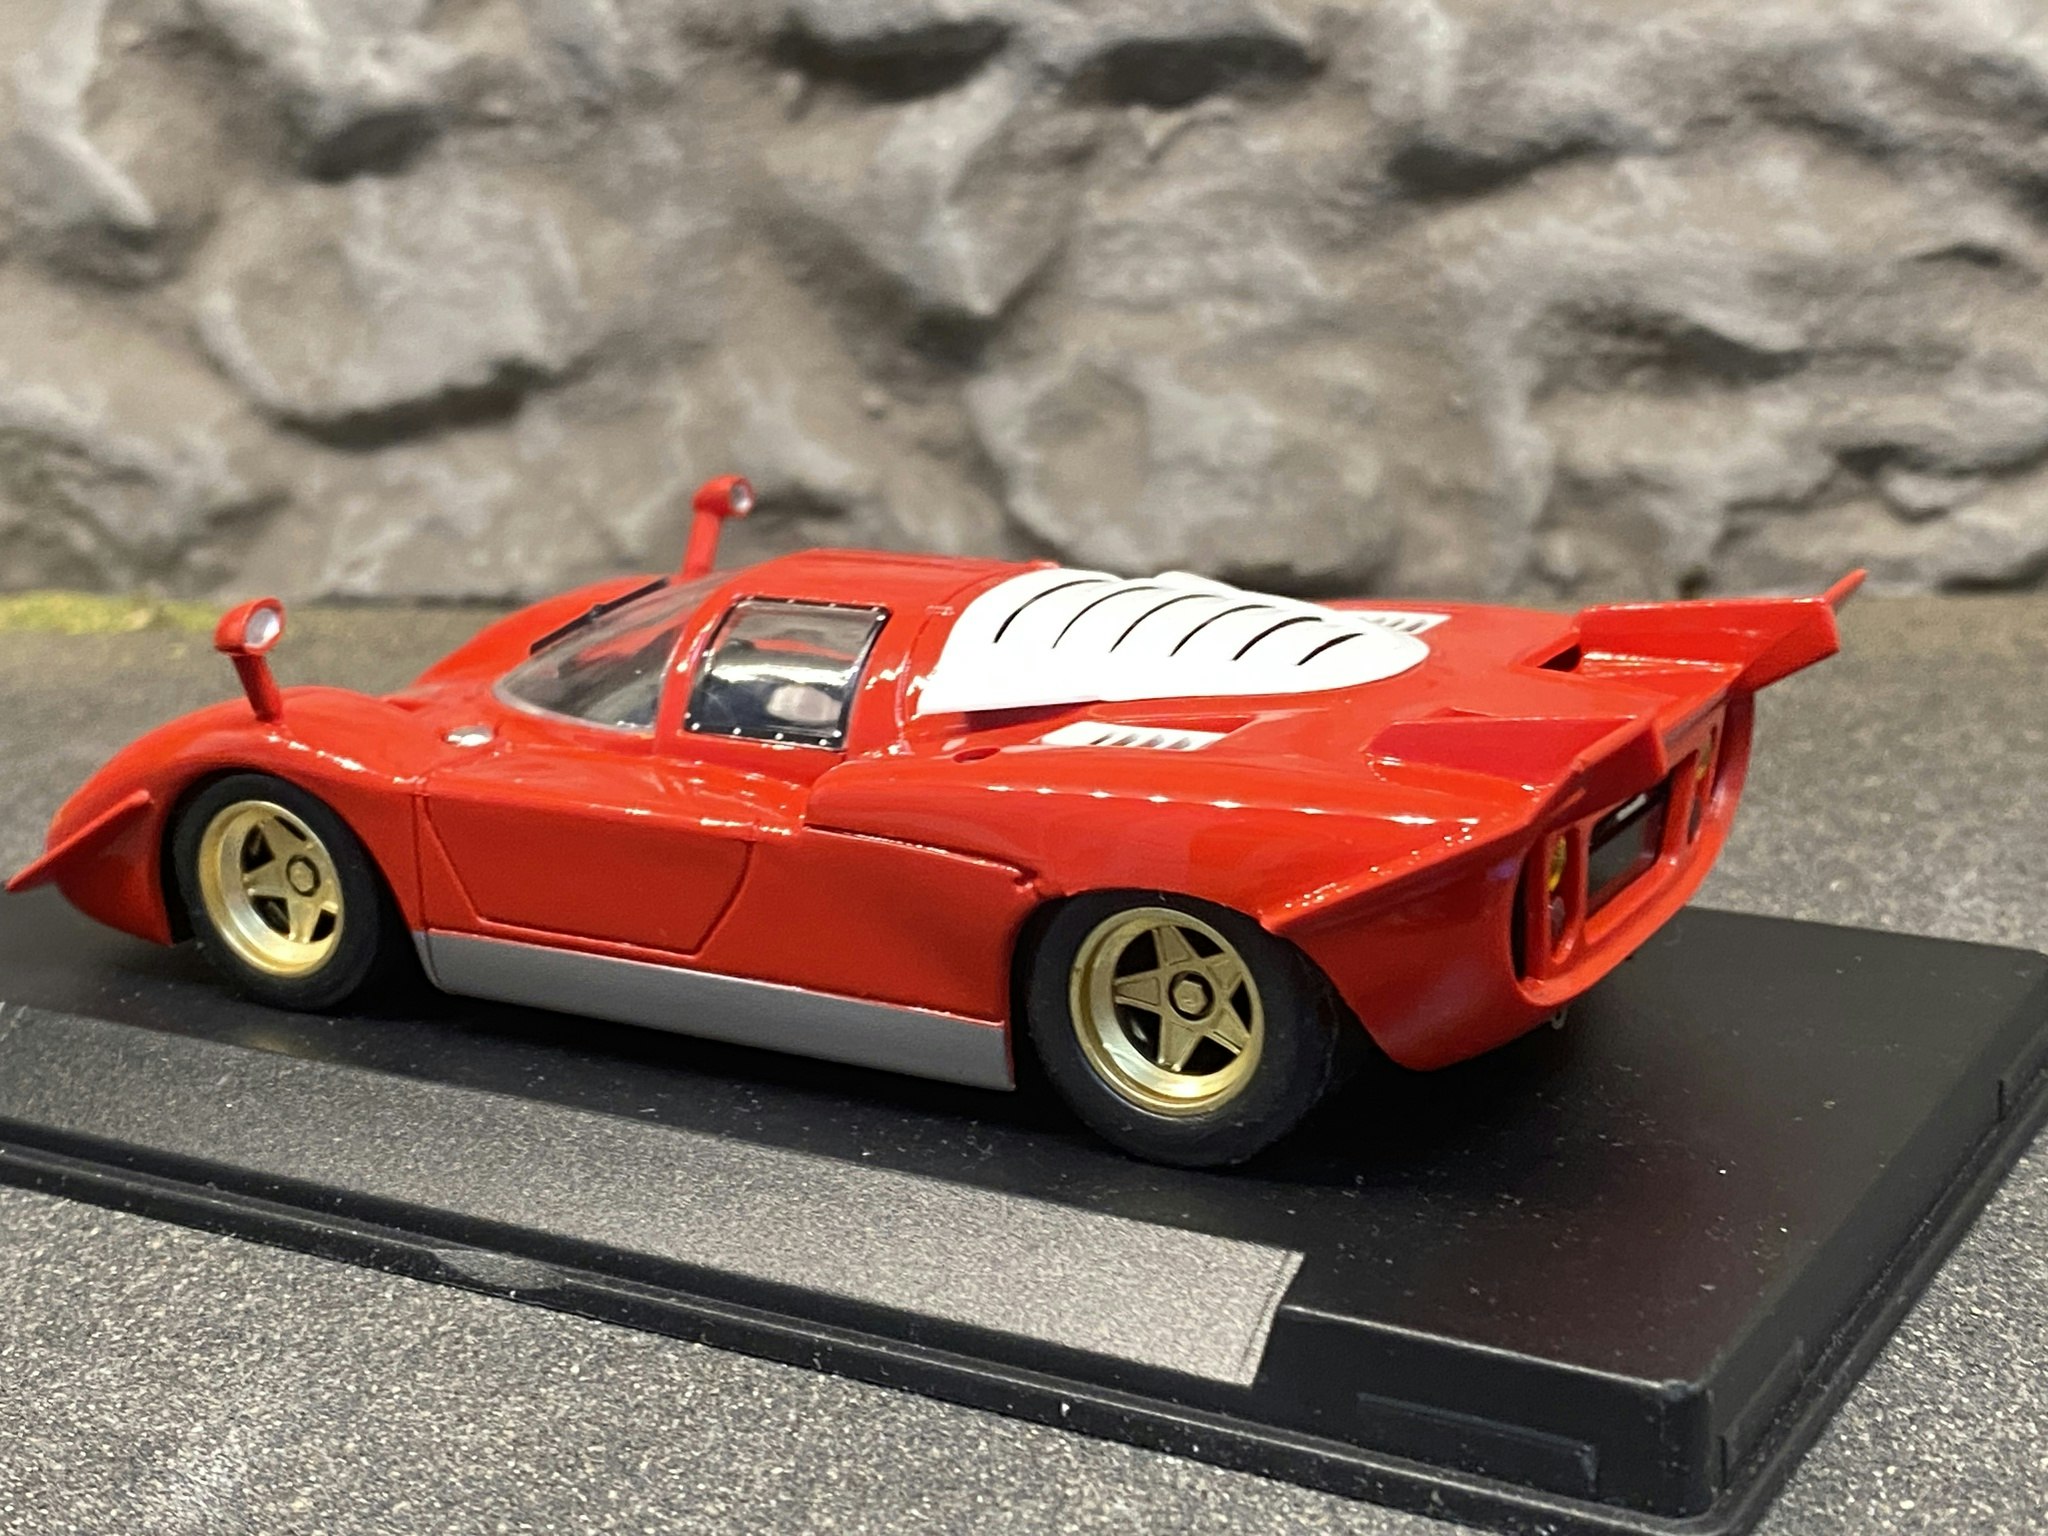 Skala 1/32 Analog FLY Bil till Bilbana: Ferrari 512 S Berlinetta, utan dekaler